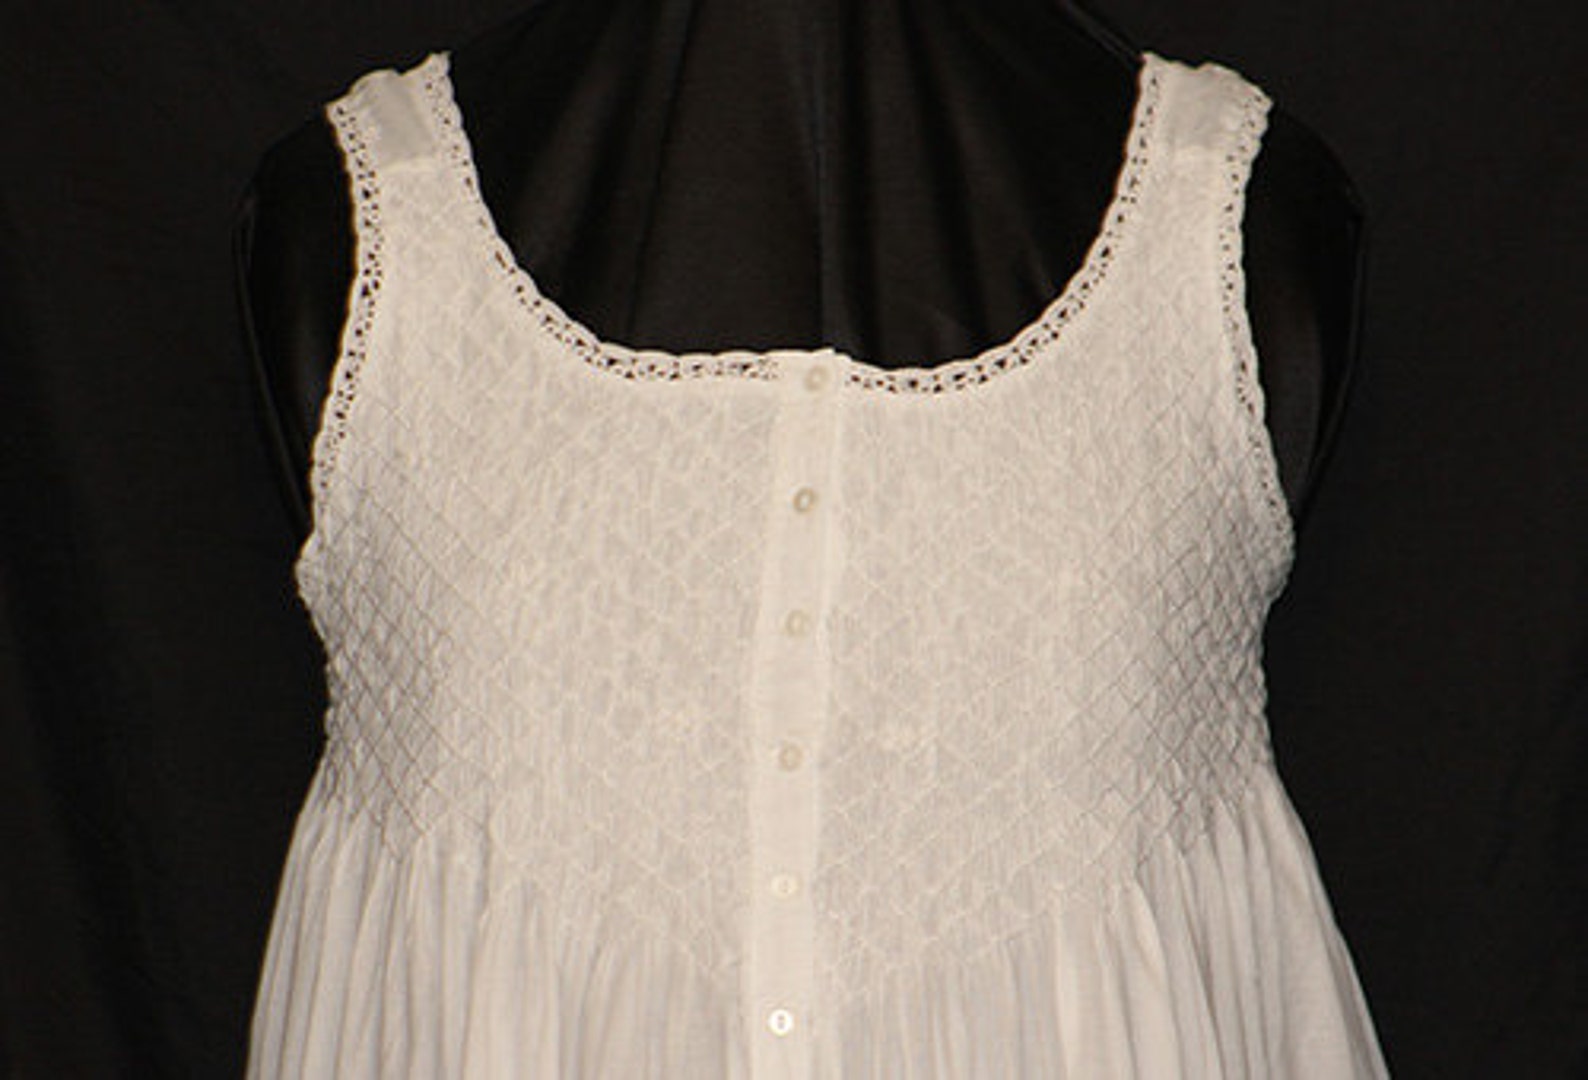 024-Sleeveless Long Smocked White Cotton Night Gown | Etsy